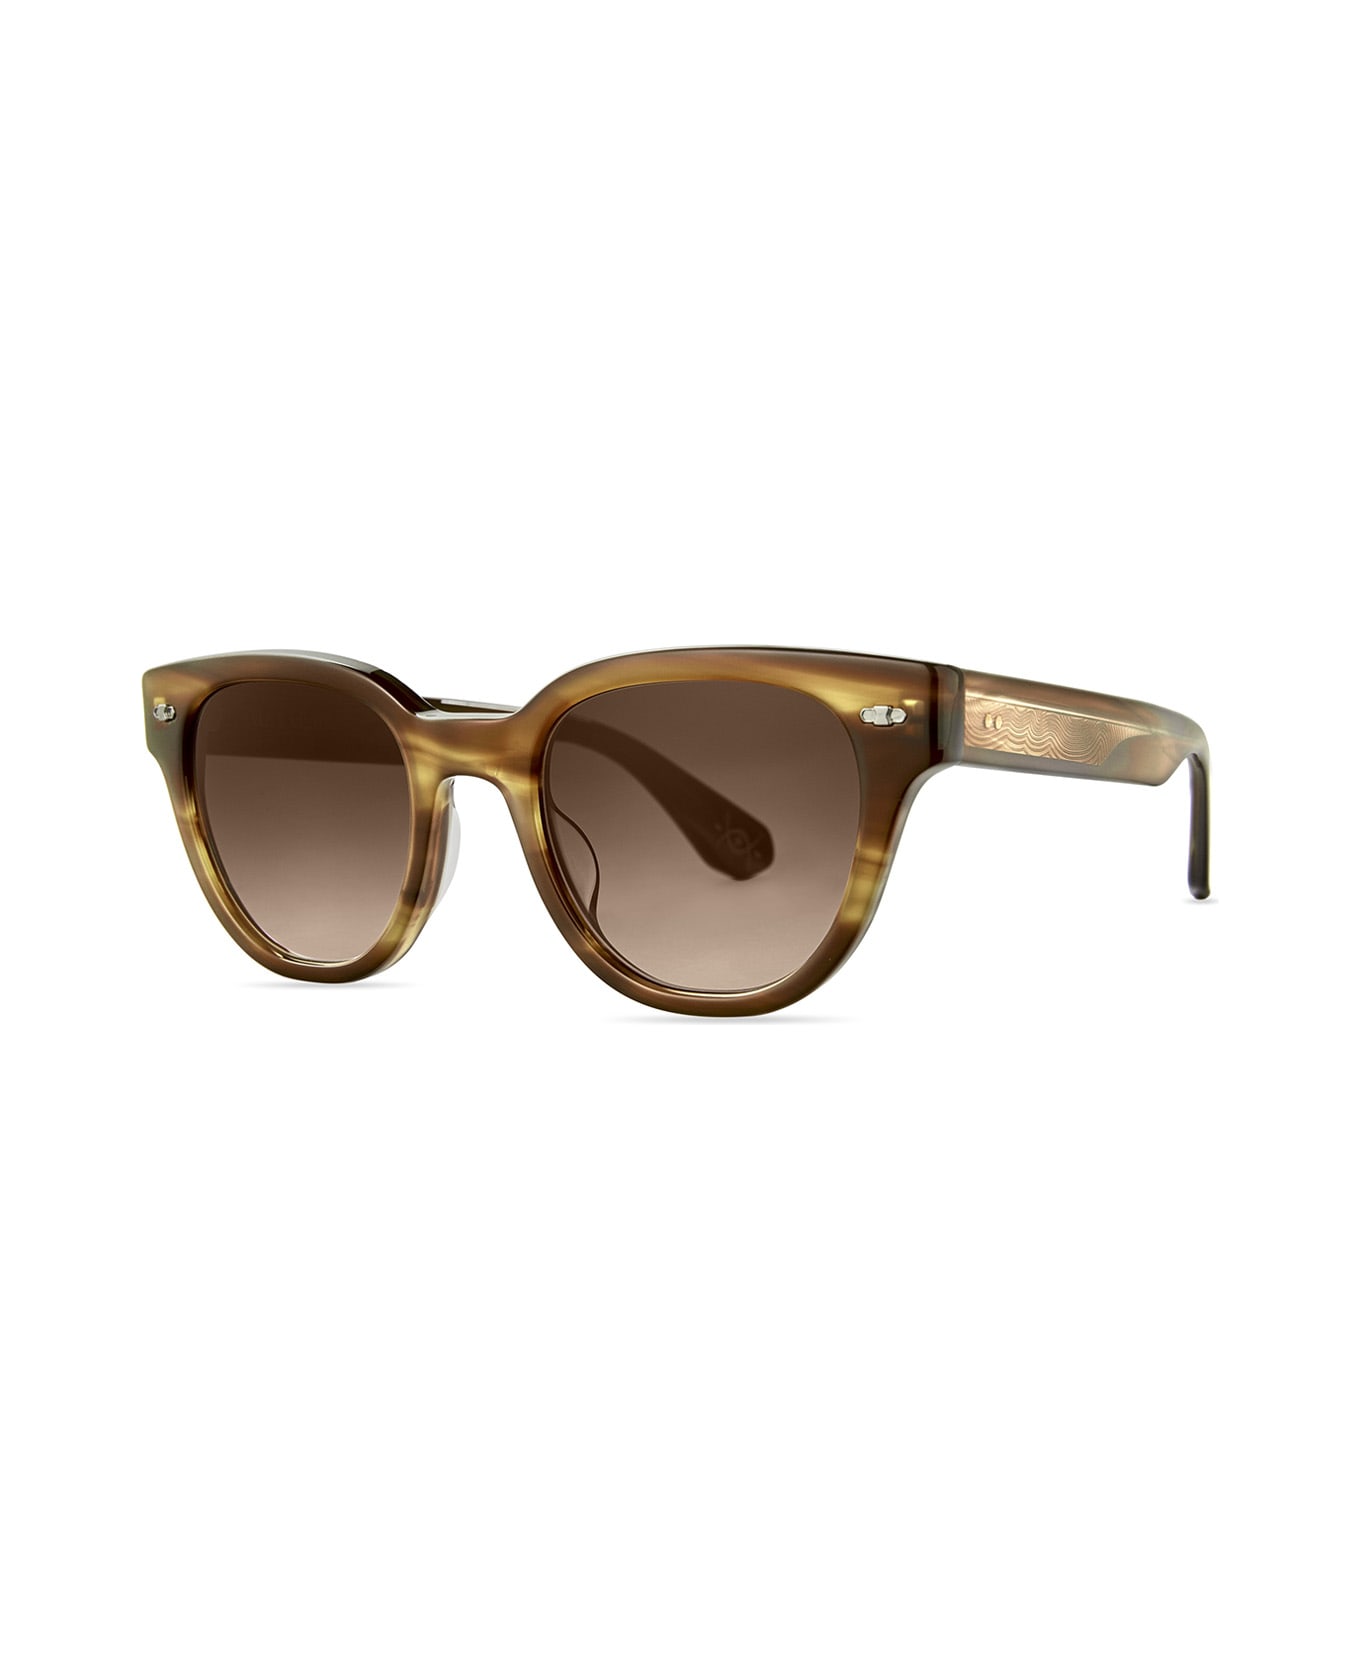 Mr. Leight Jane S Beachwood-white Gold/saturn Gradient Sunglasses - Beachwood-White Gold/Saturn Gradient サングラス